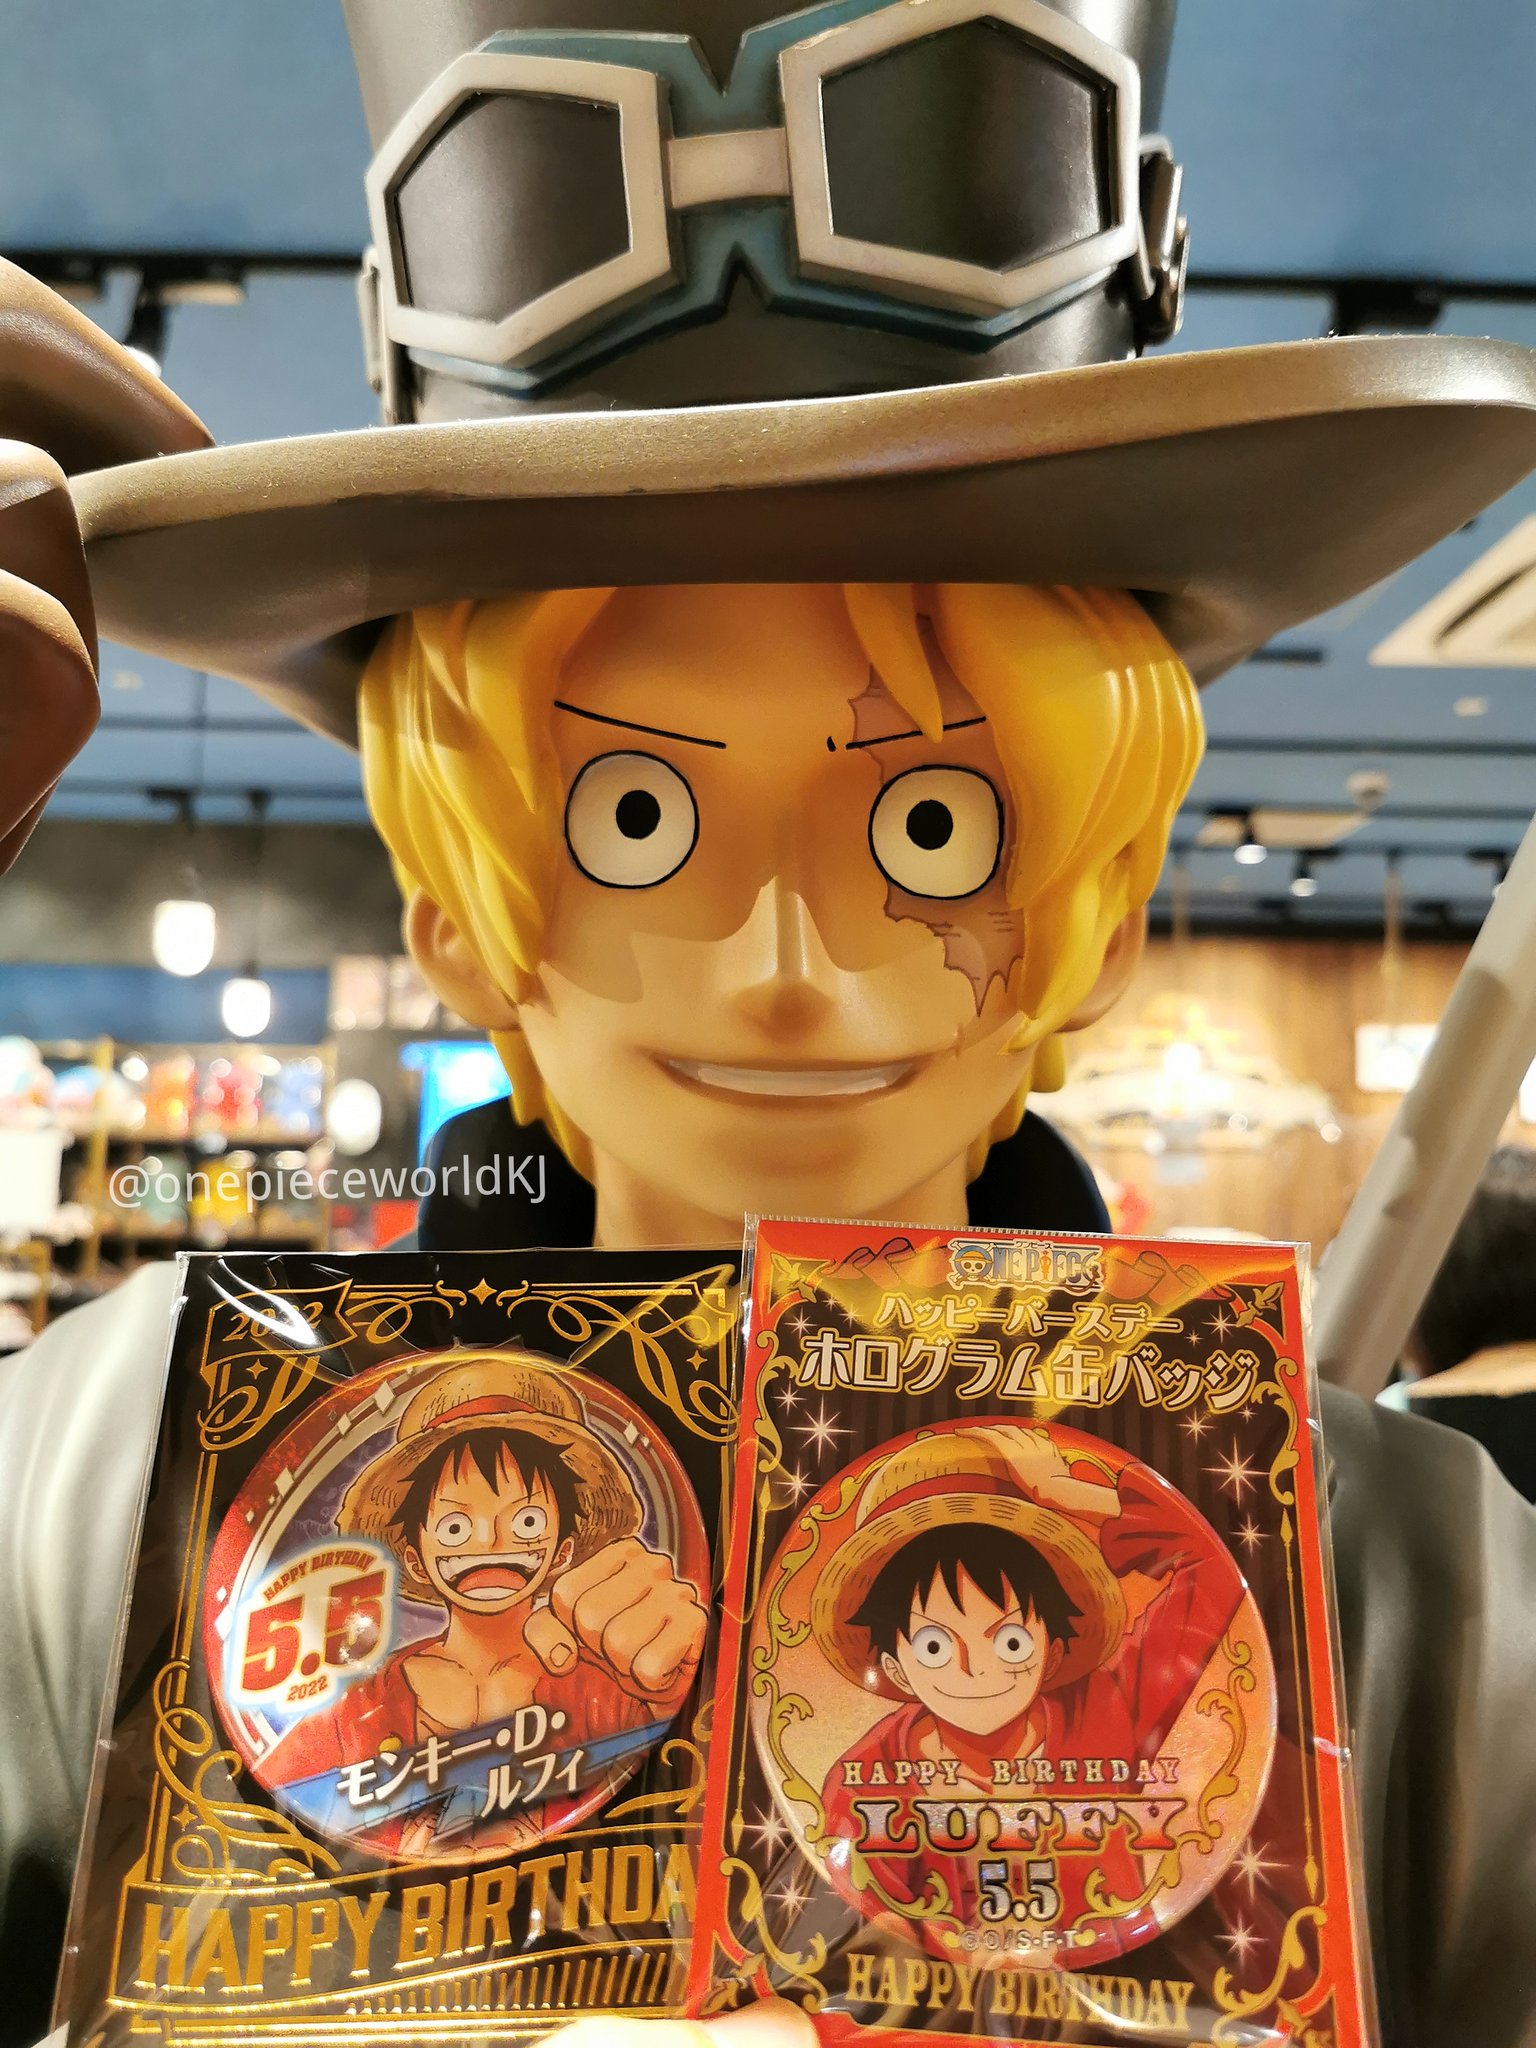 One Piece World Kumamoto Japan Onepieceworldkj Twitter